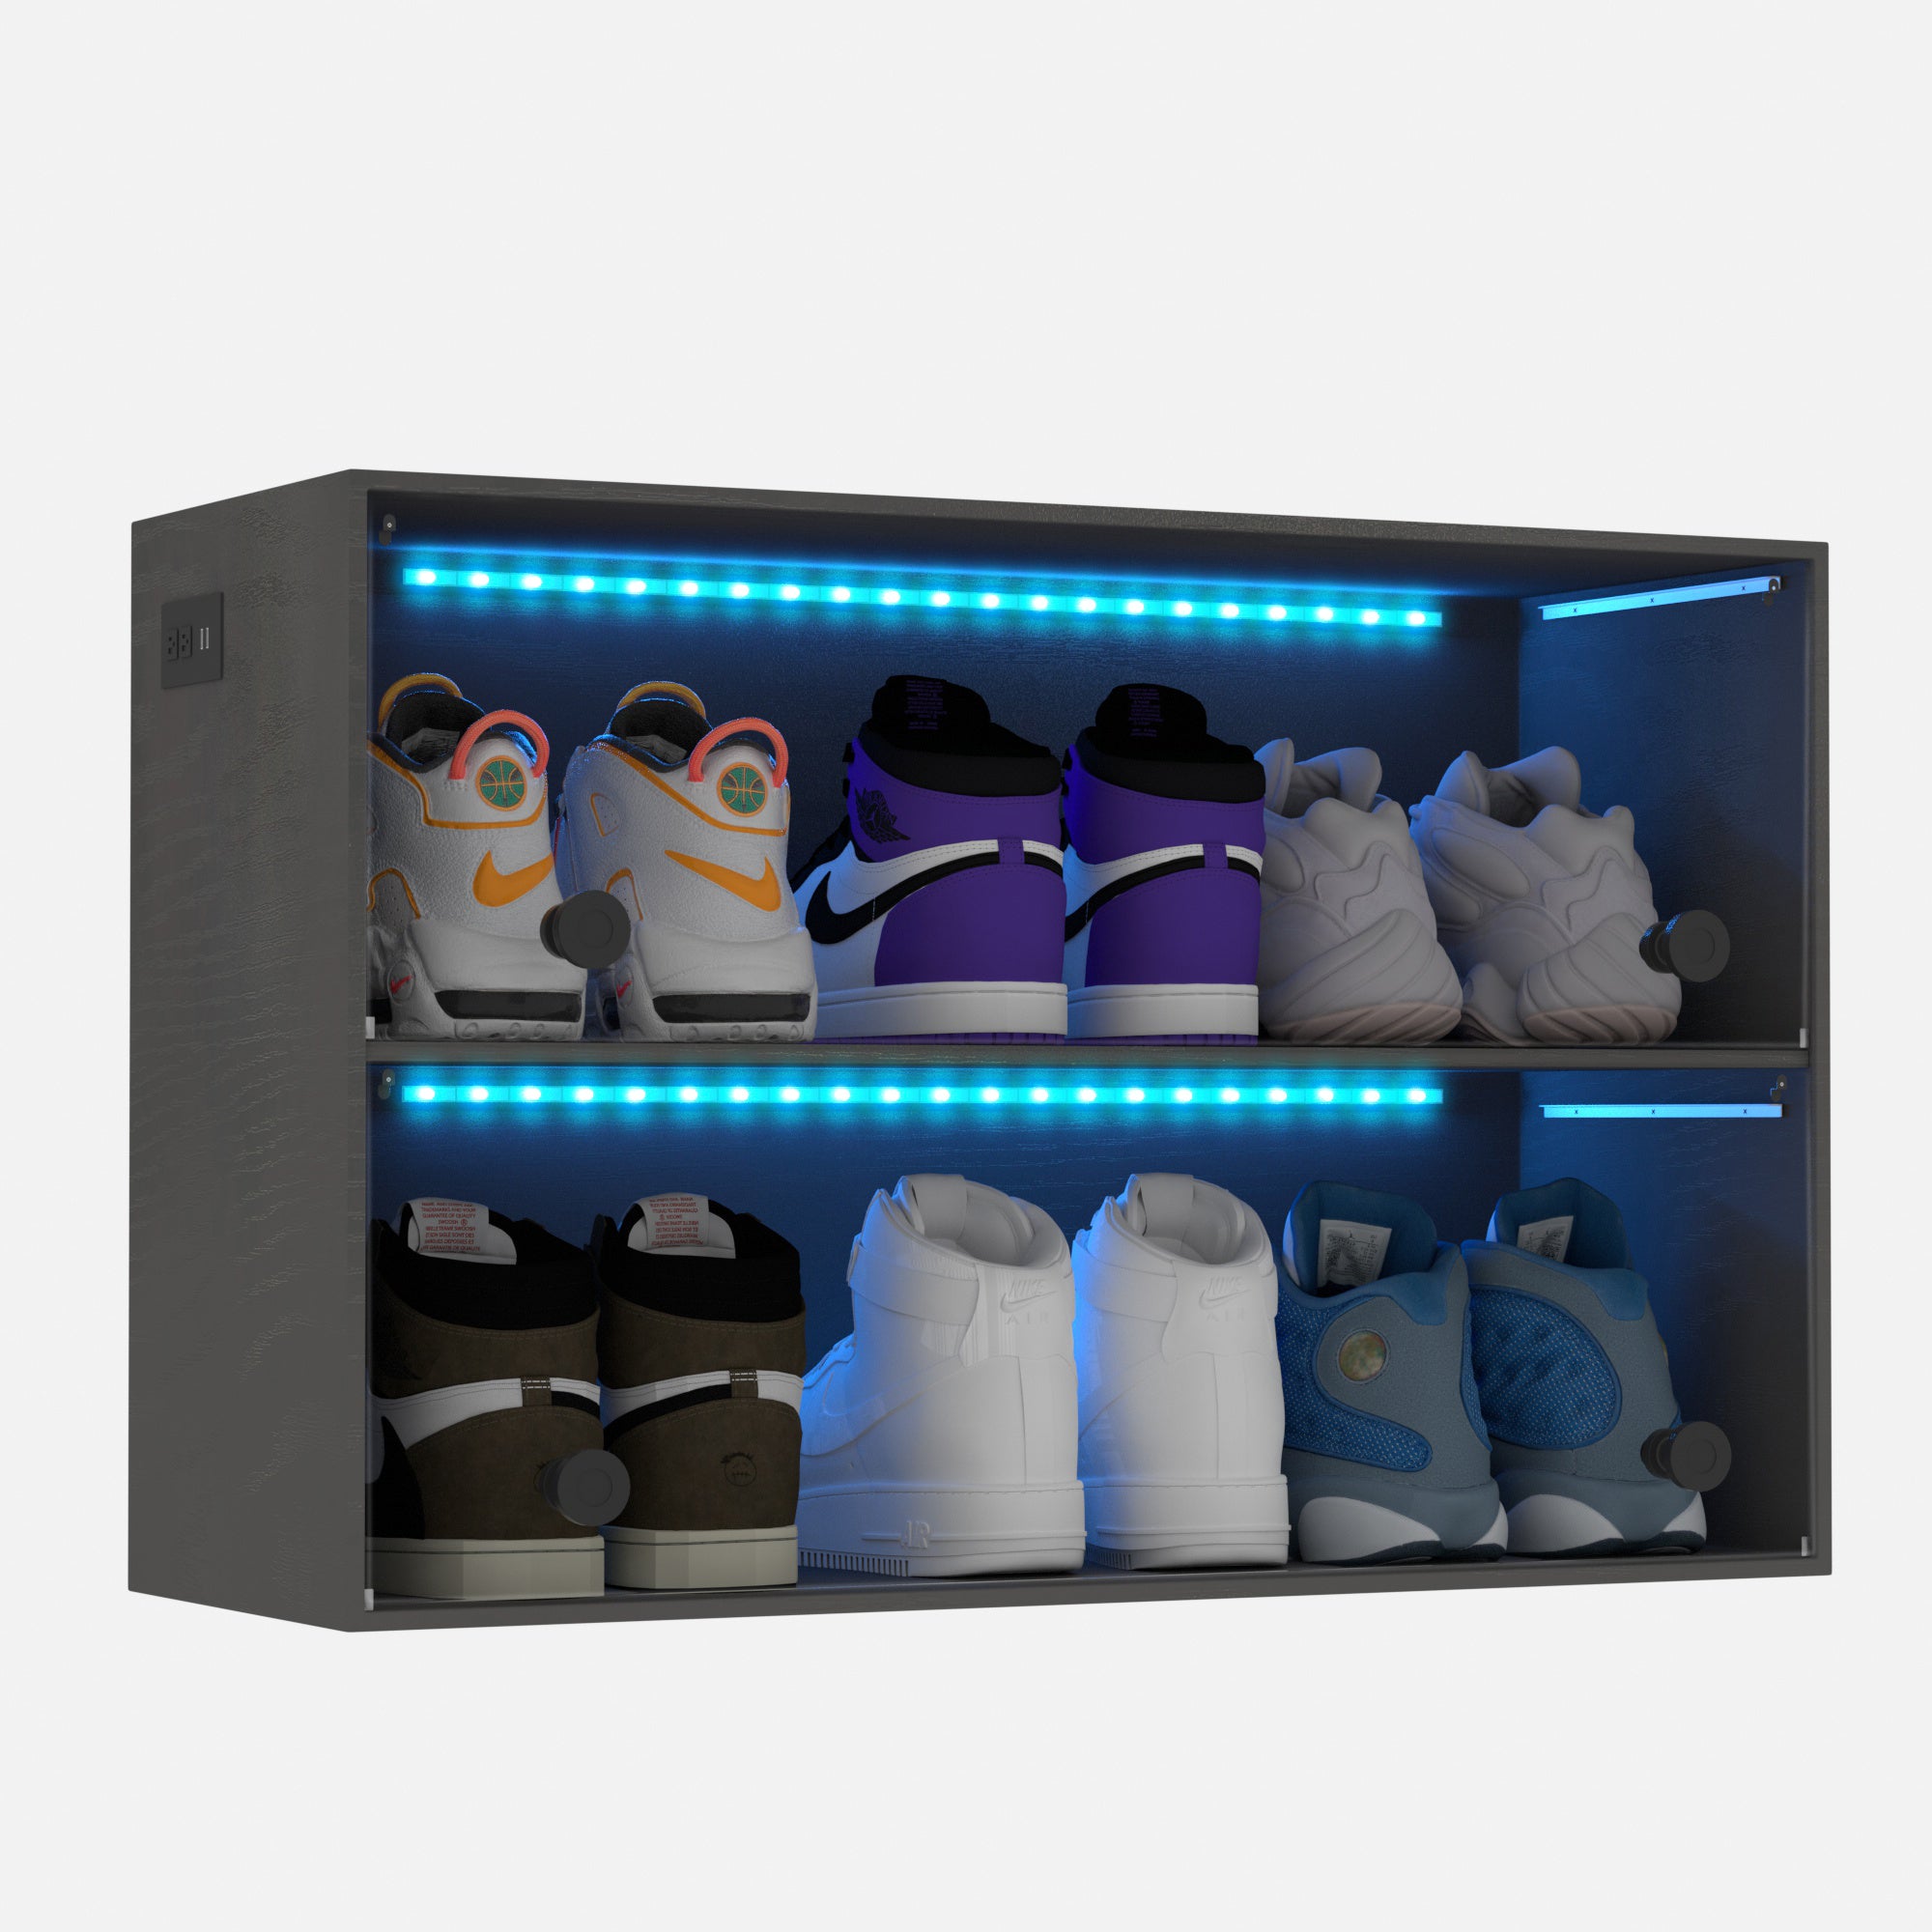 Caja de almacenamiento organizadora de zapatos apilable de madera con luz Led RGB, puerta corrediza de vidrio para exhibir zapatillas